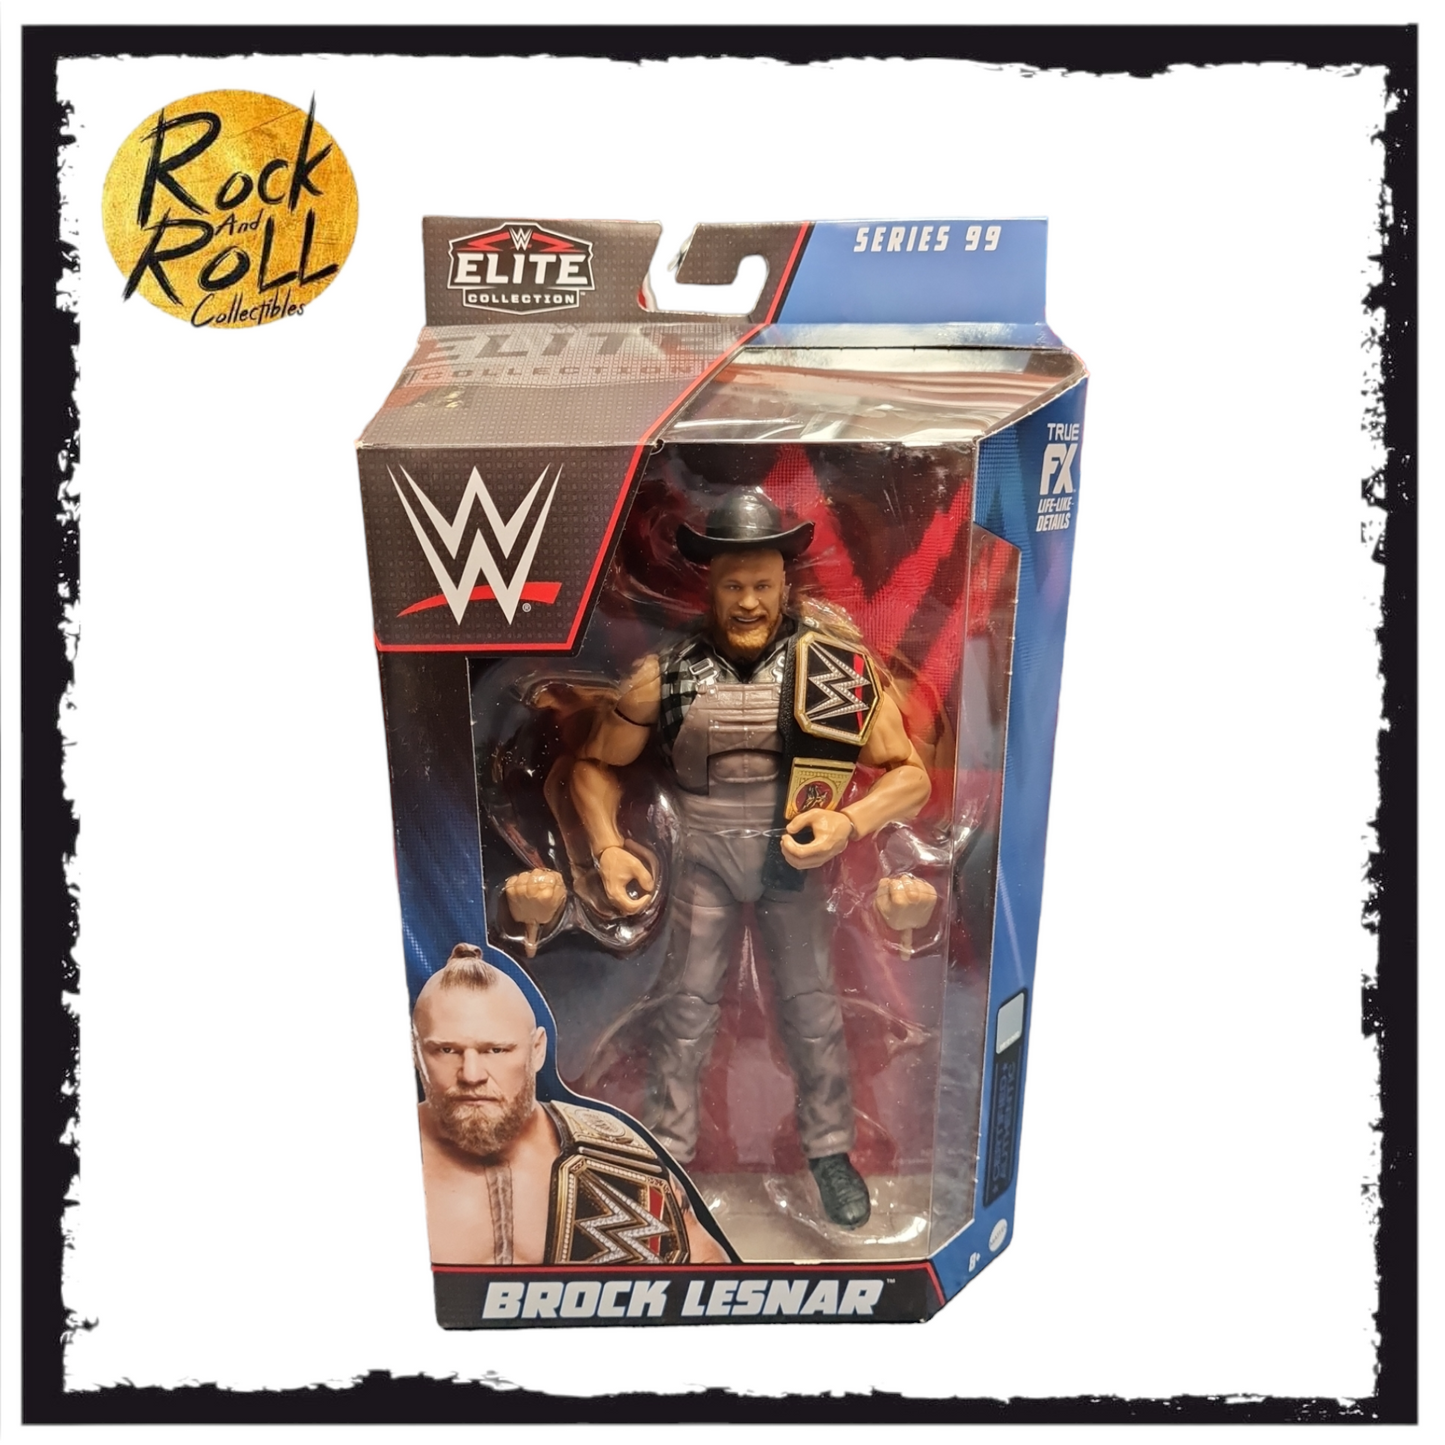 Damaged Packaging - WWE Elite Series 99 US Import - Brock Lesnar